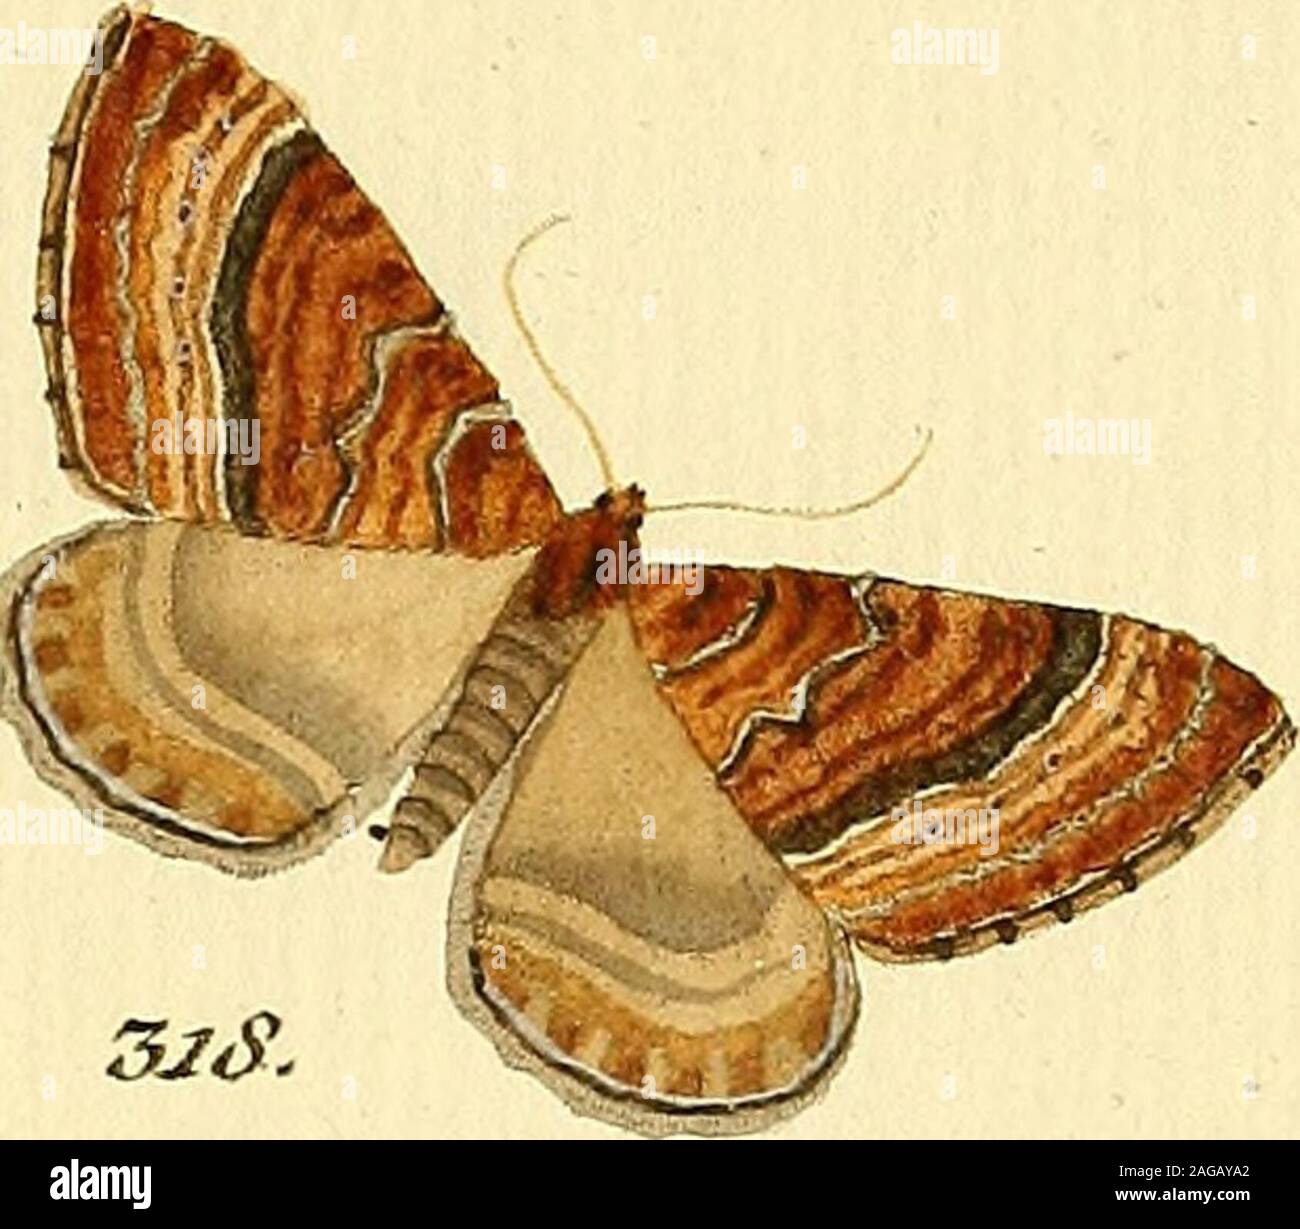 . Sammlung europscher Schmetterlinge, errichtet von Jacob Hner in Augsburg. /^^/i)n^:^^^.y , p. ^A^Om^t/Oe-, ^. ^ JZl &lt;zy£/ry:f^^/noe^, J^ di Oy,. m-, ^Wj( 5Jp. Stock Photo